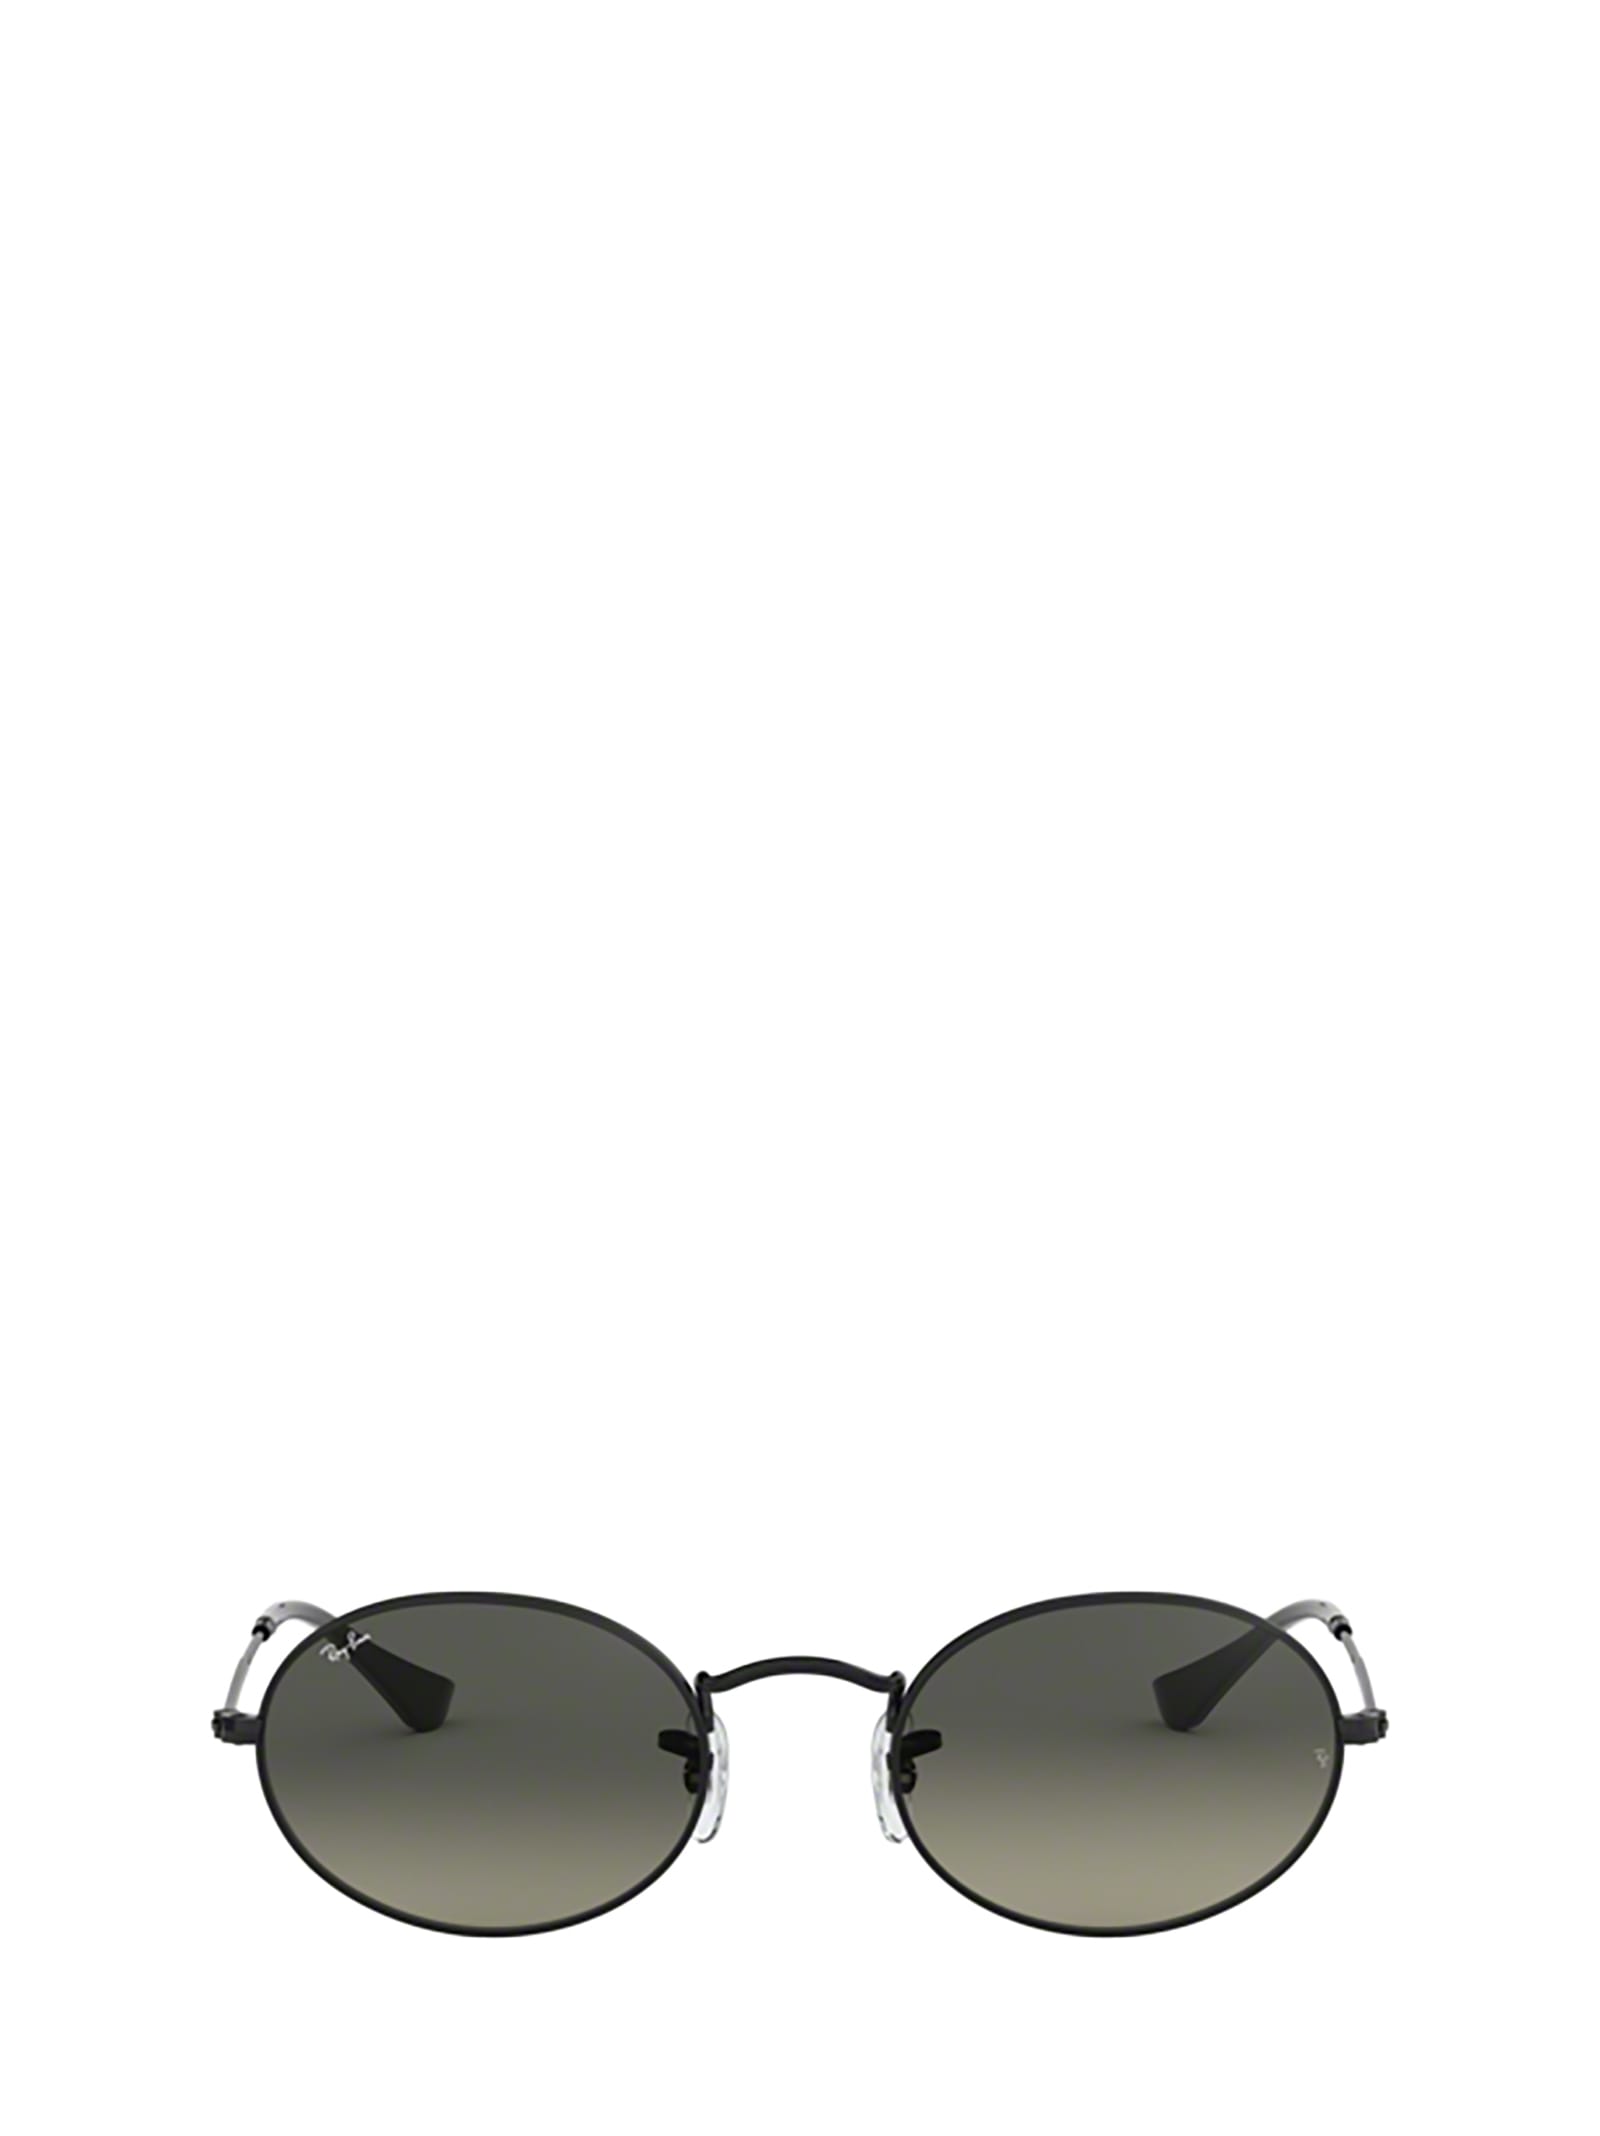 Ray Ban Ray-ban Rb3547n Black Sunglasses